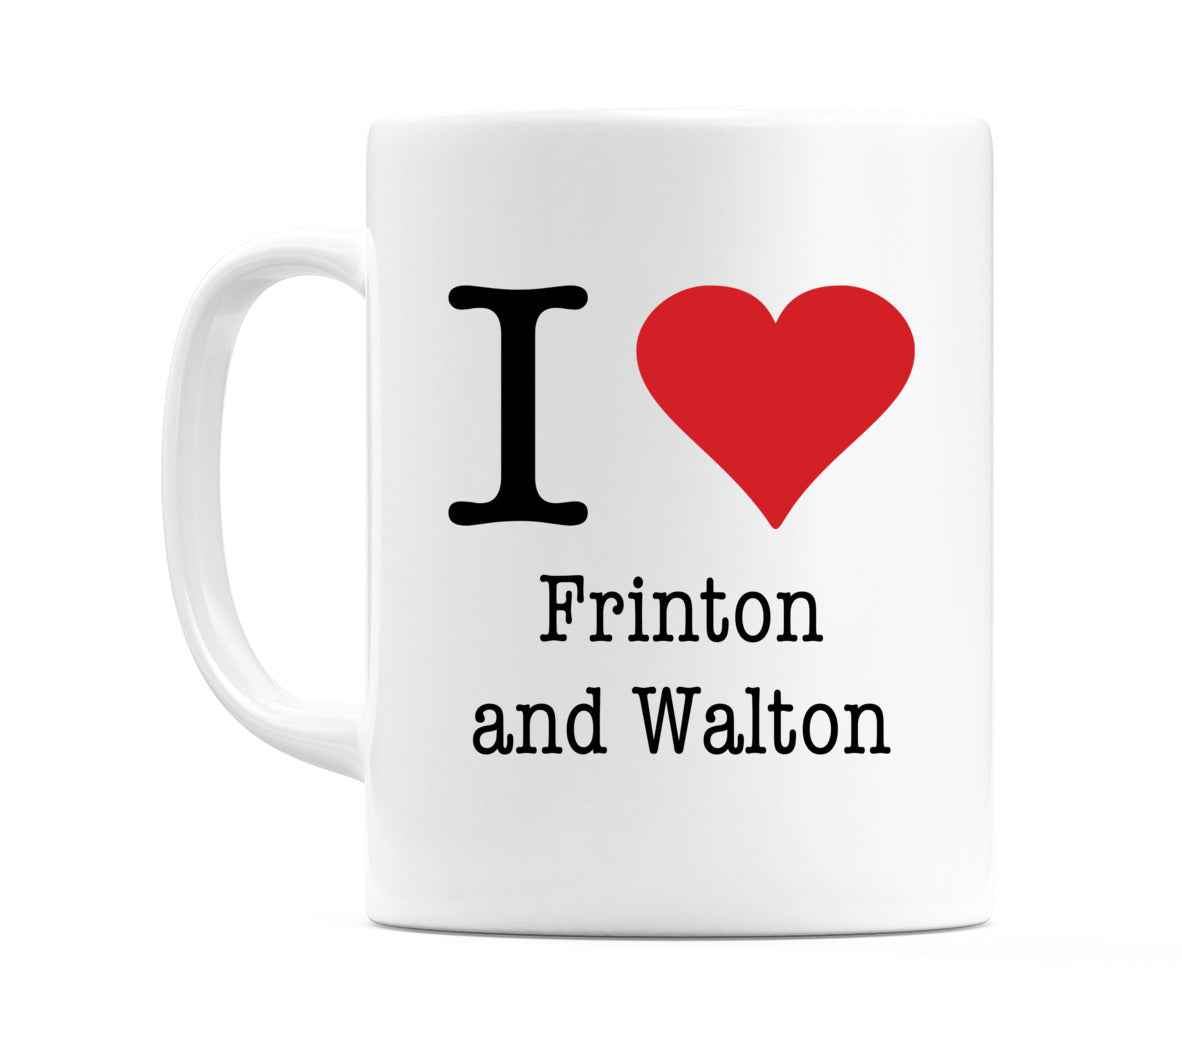 I Love Frinton and Walton Mug